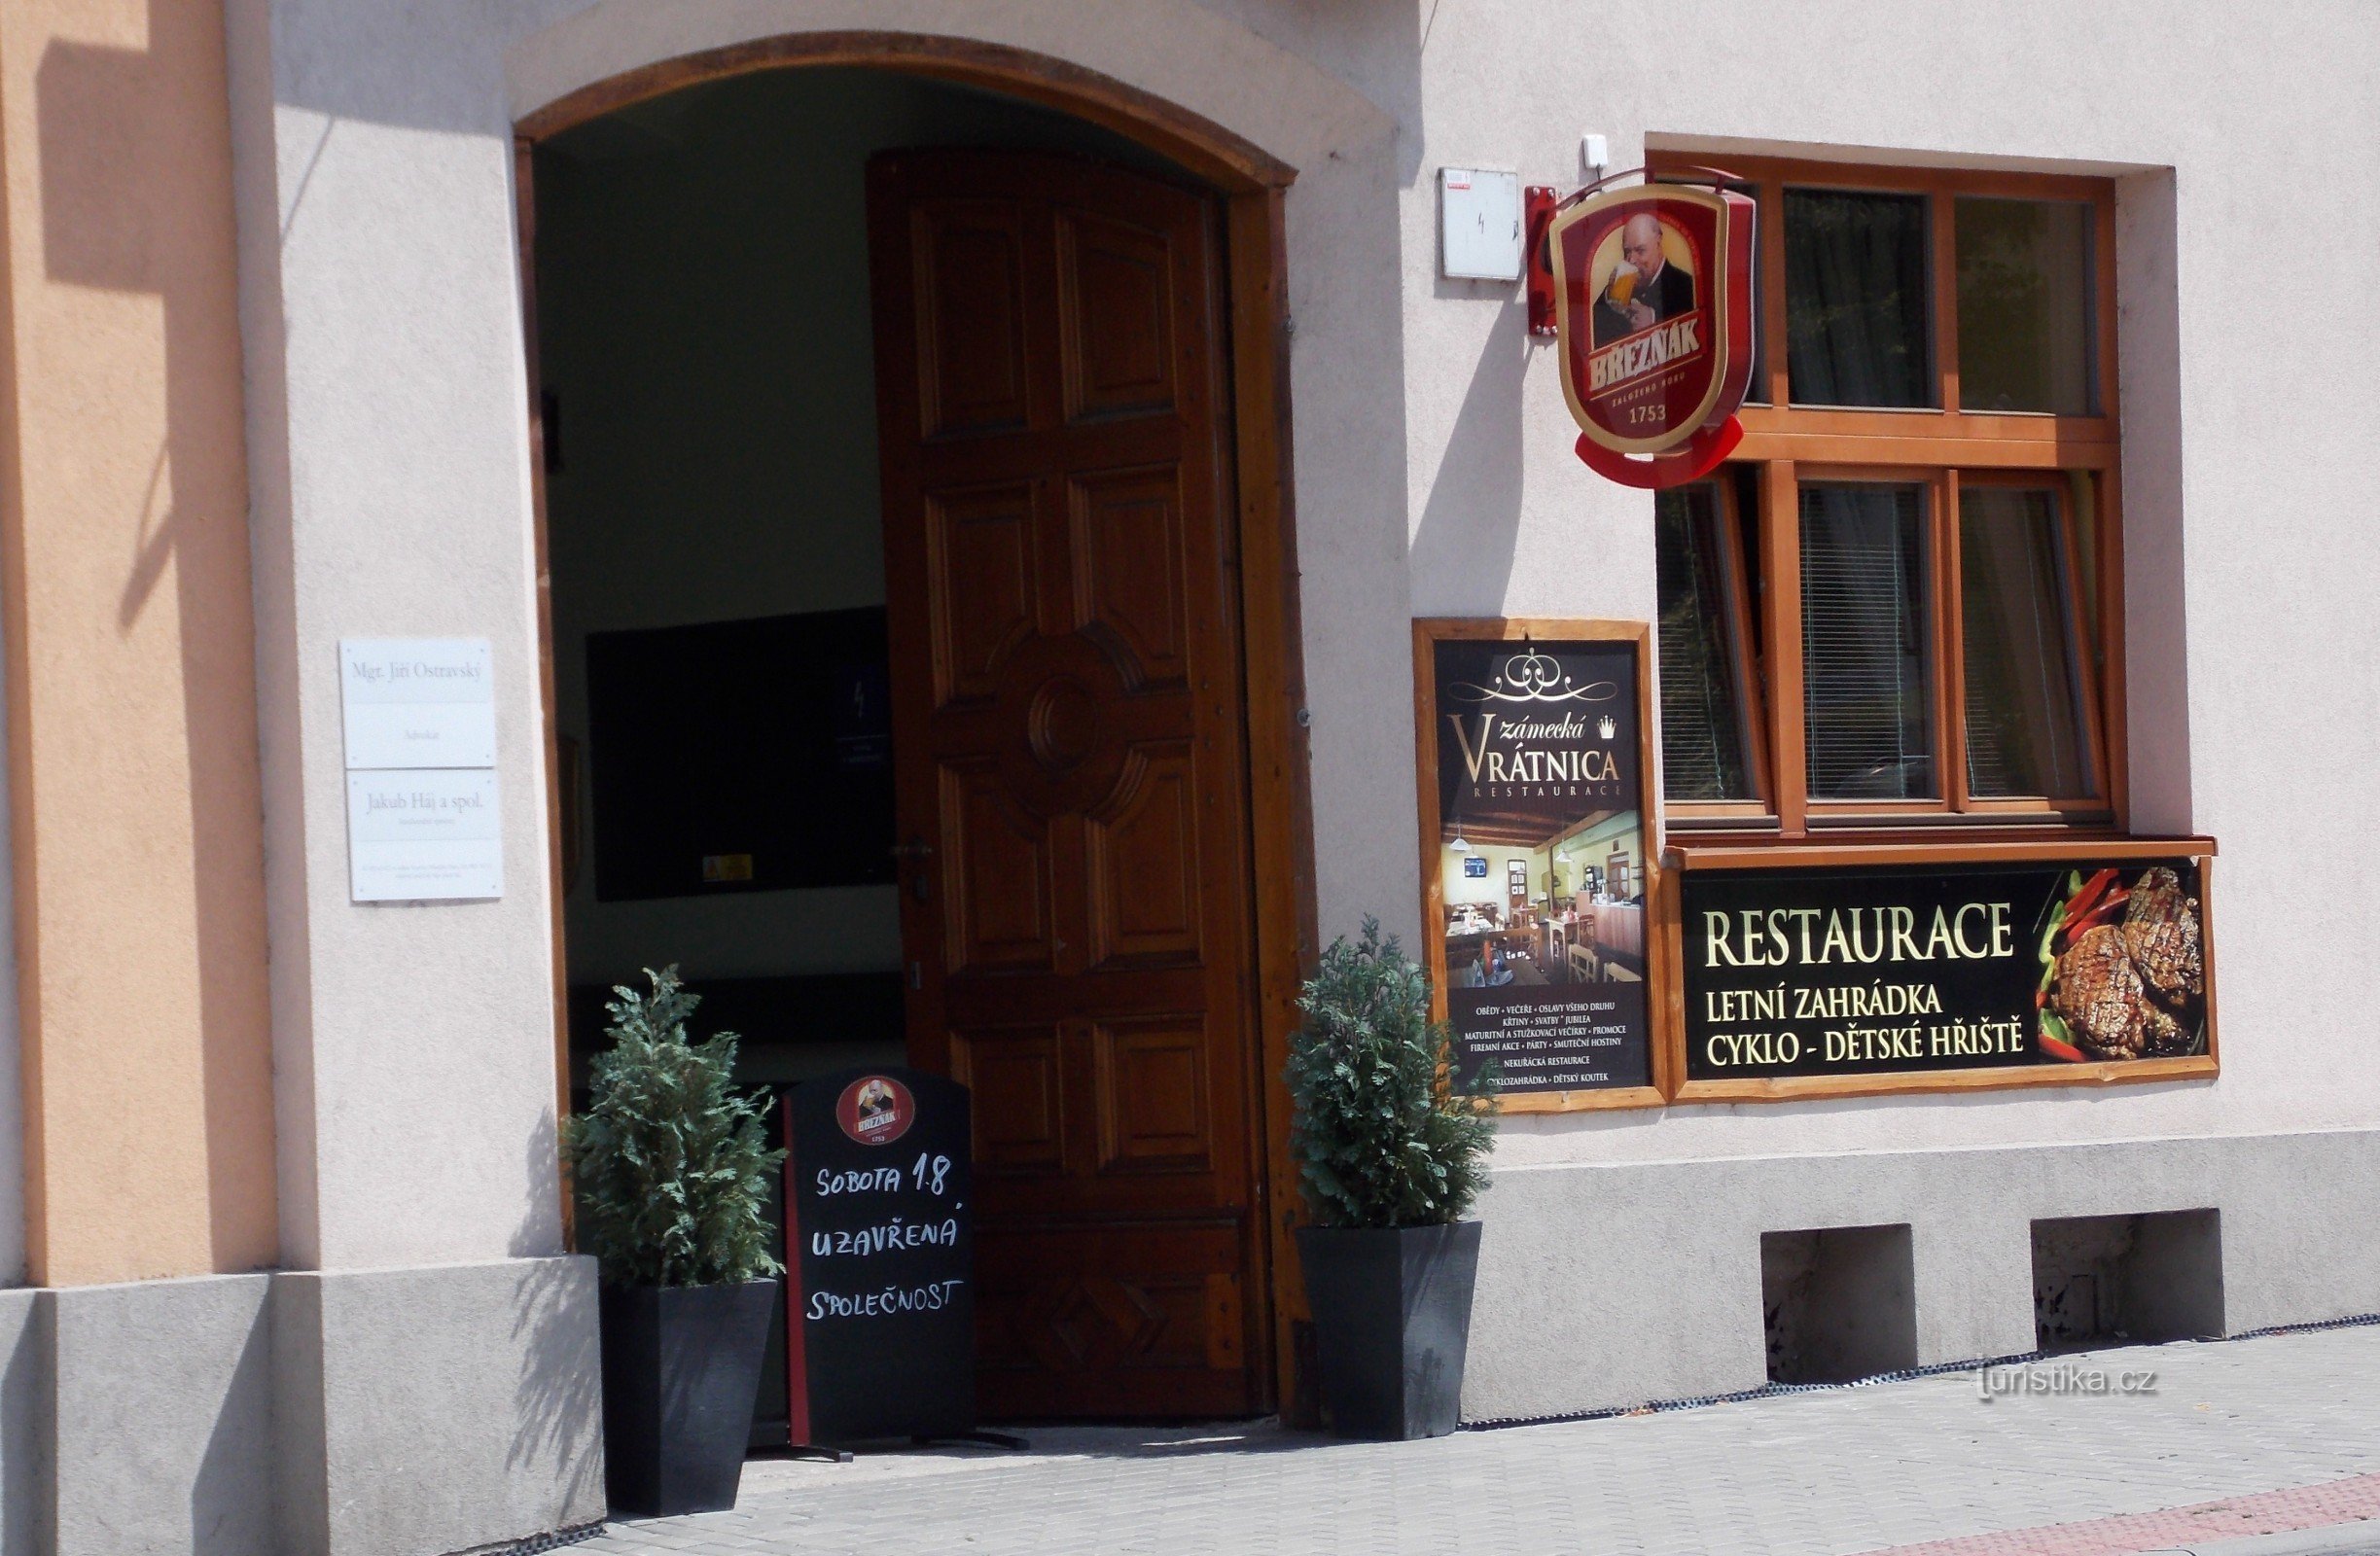 Restaurant Burgtorhaus in Vizovice